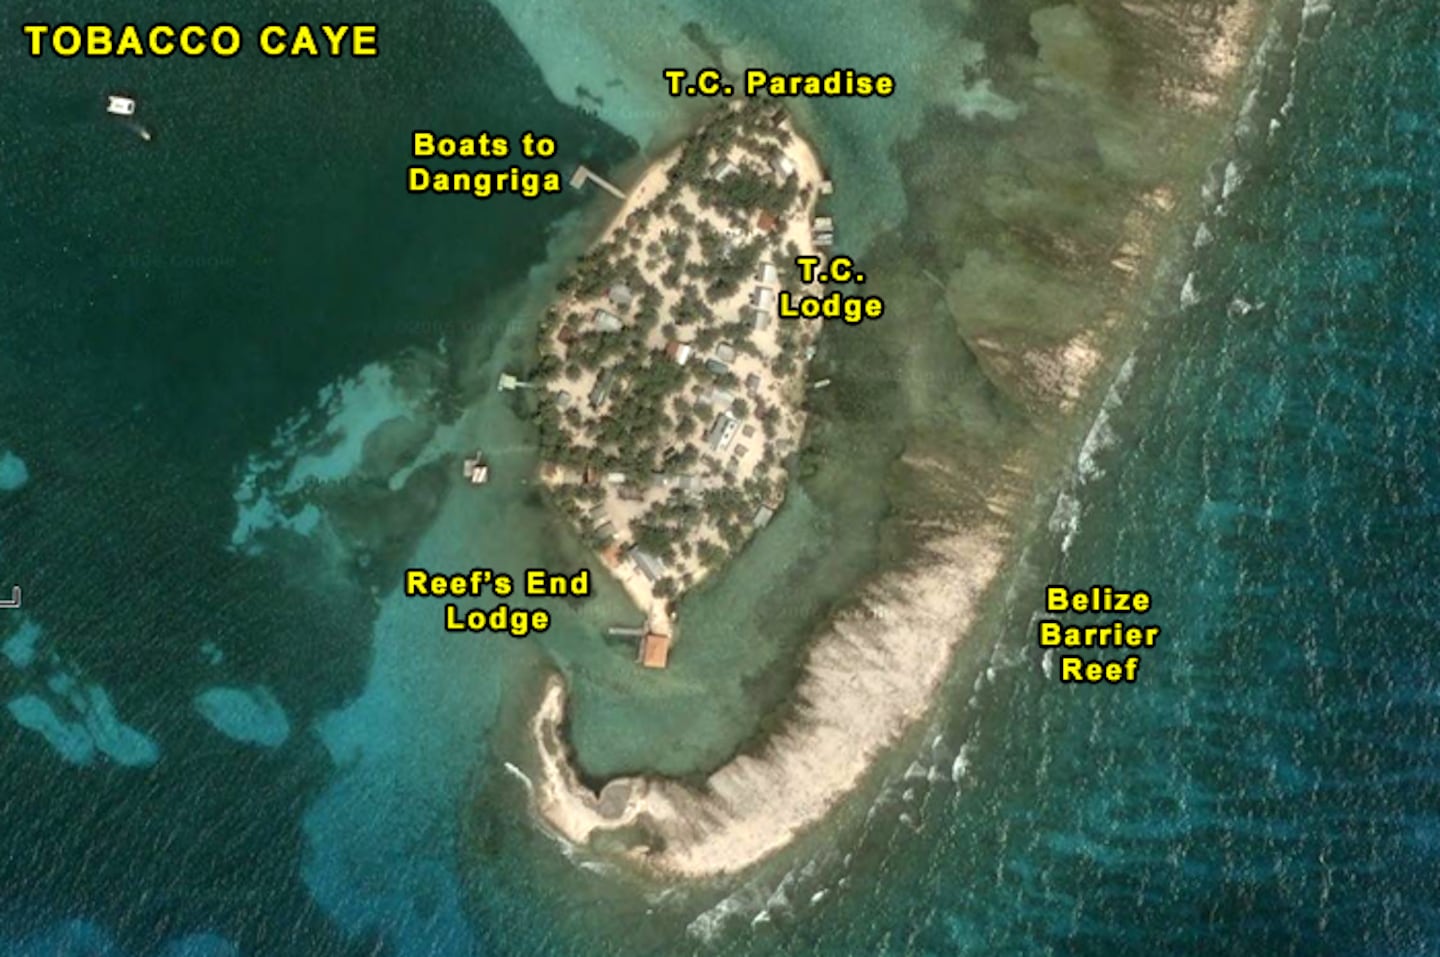 Tobacco Caye map